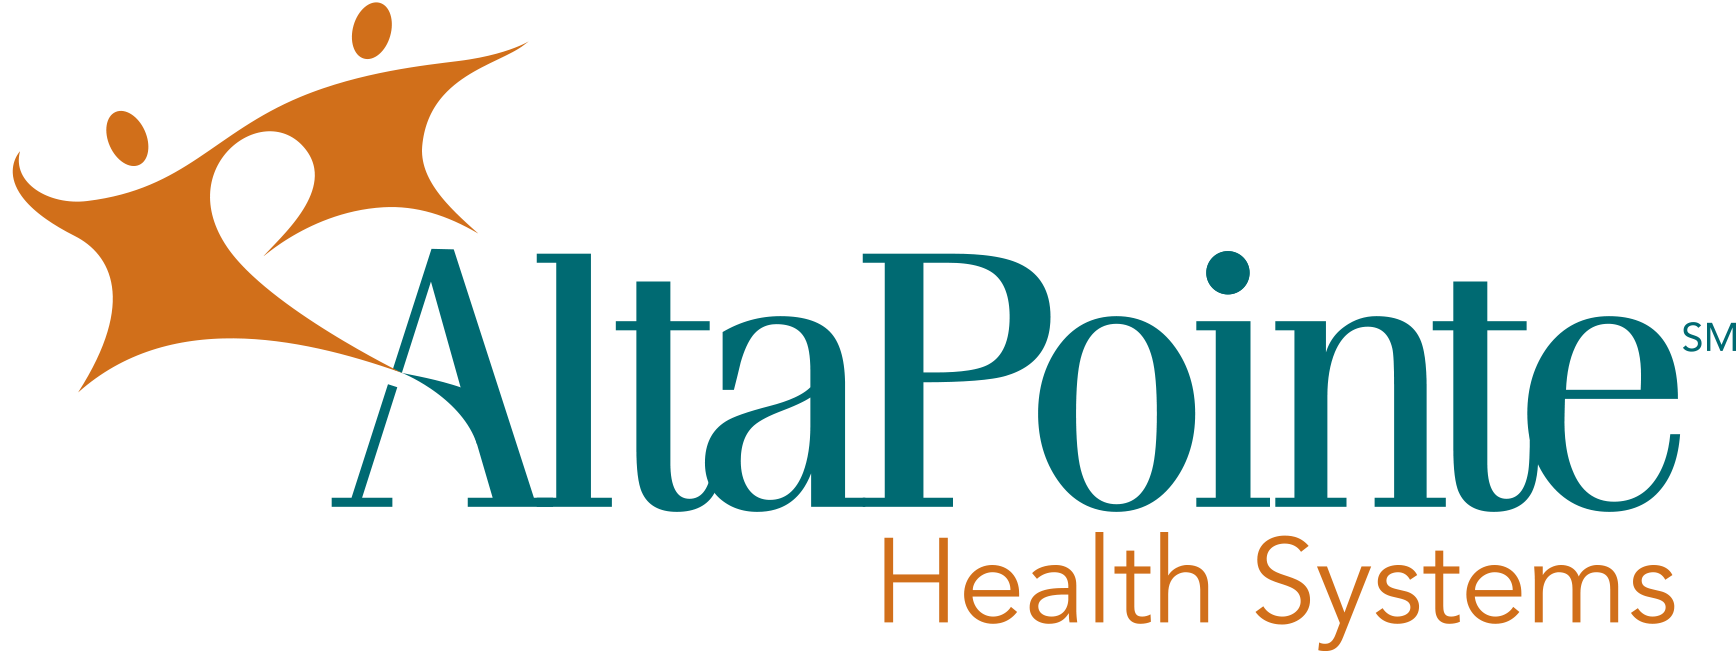 AltaPointe Health